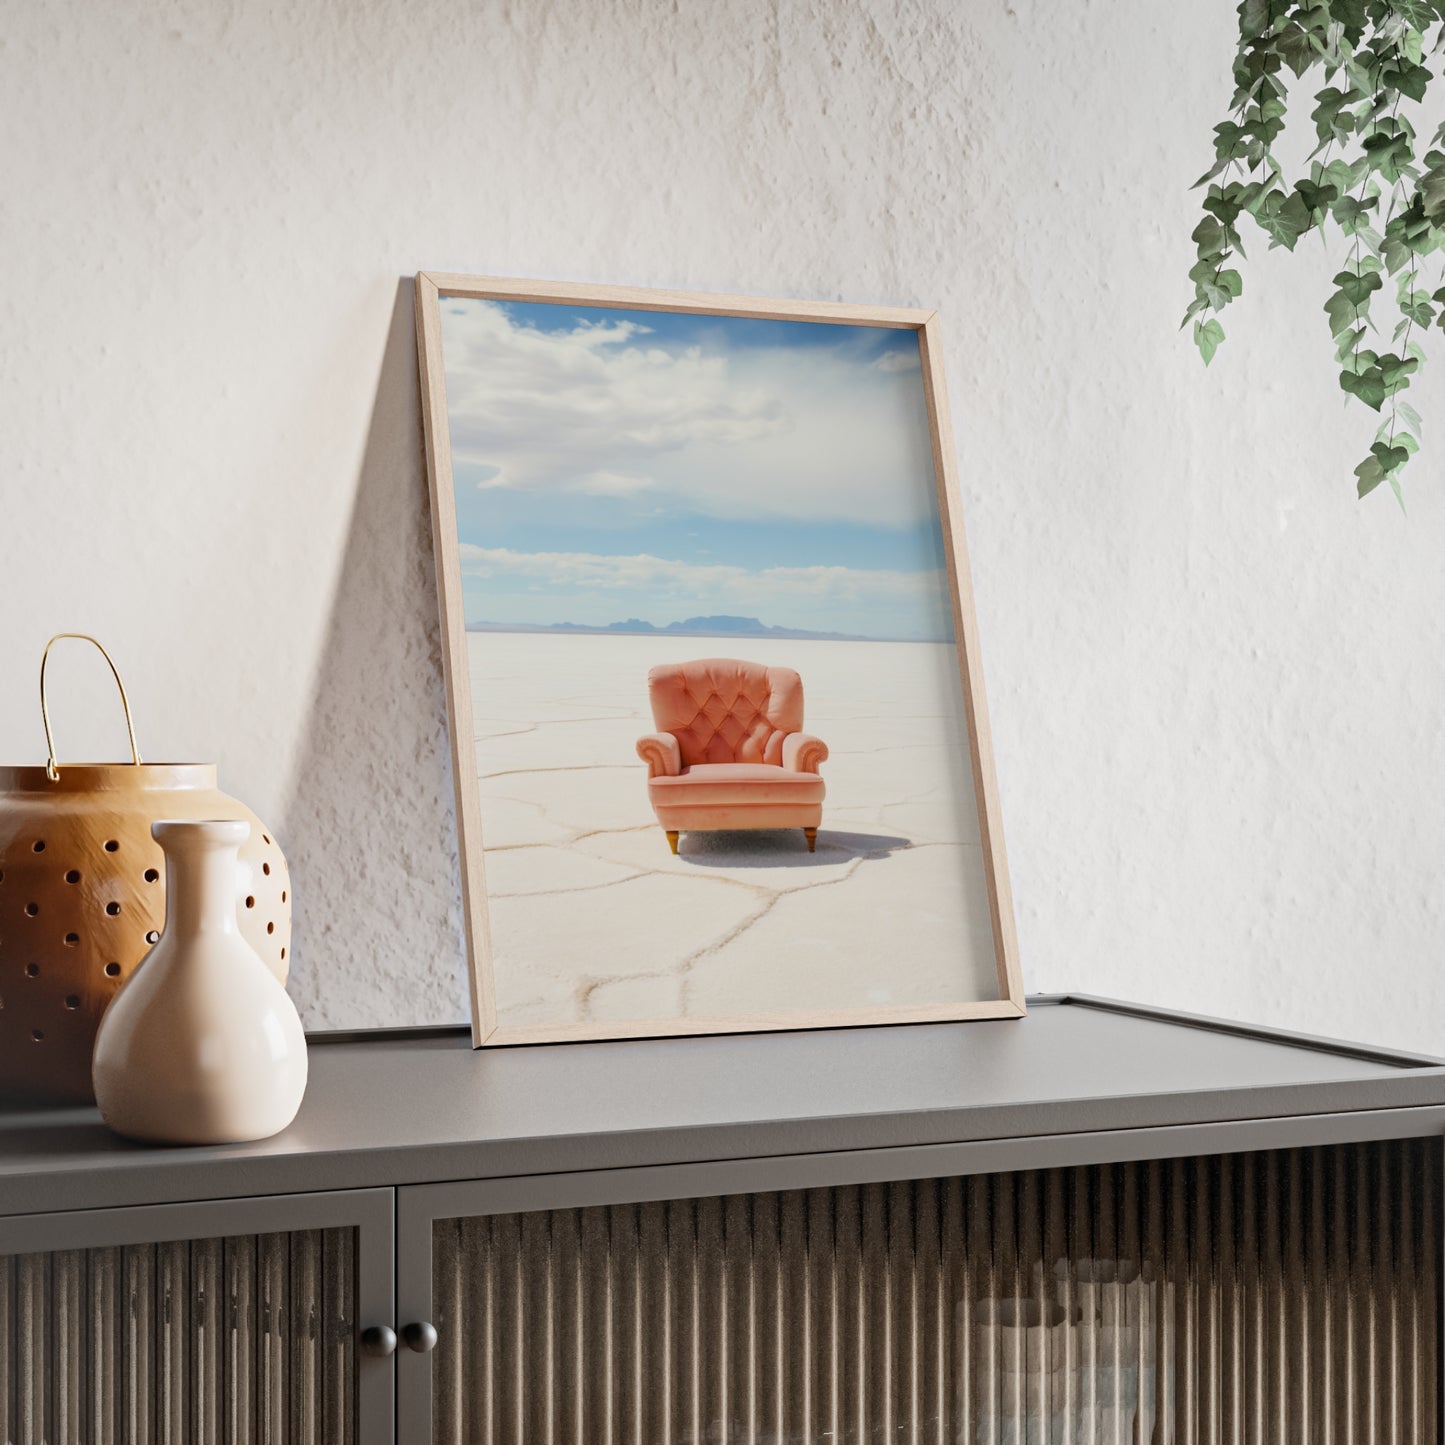 Minimalist mid century modern framed print, modern pink chair, Framed Mid Century modern wall decor, Interior Designer decor gift